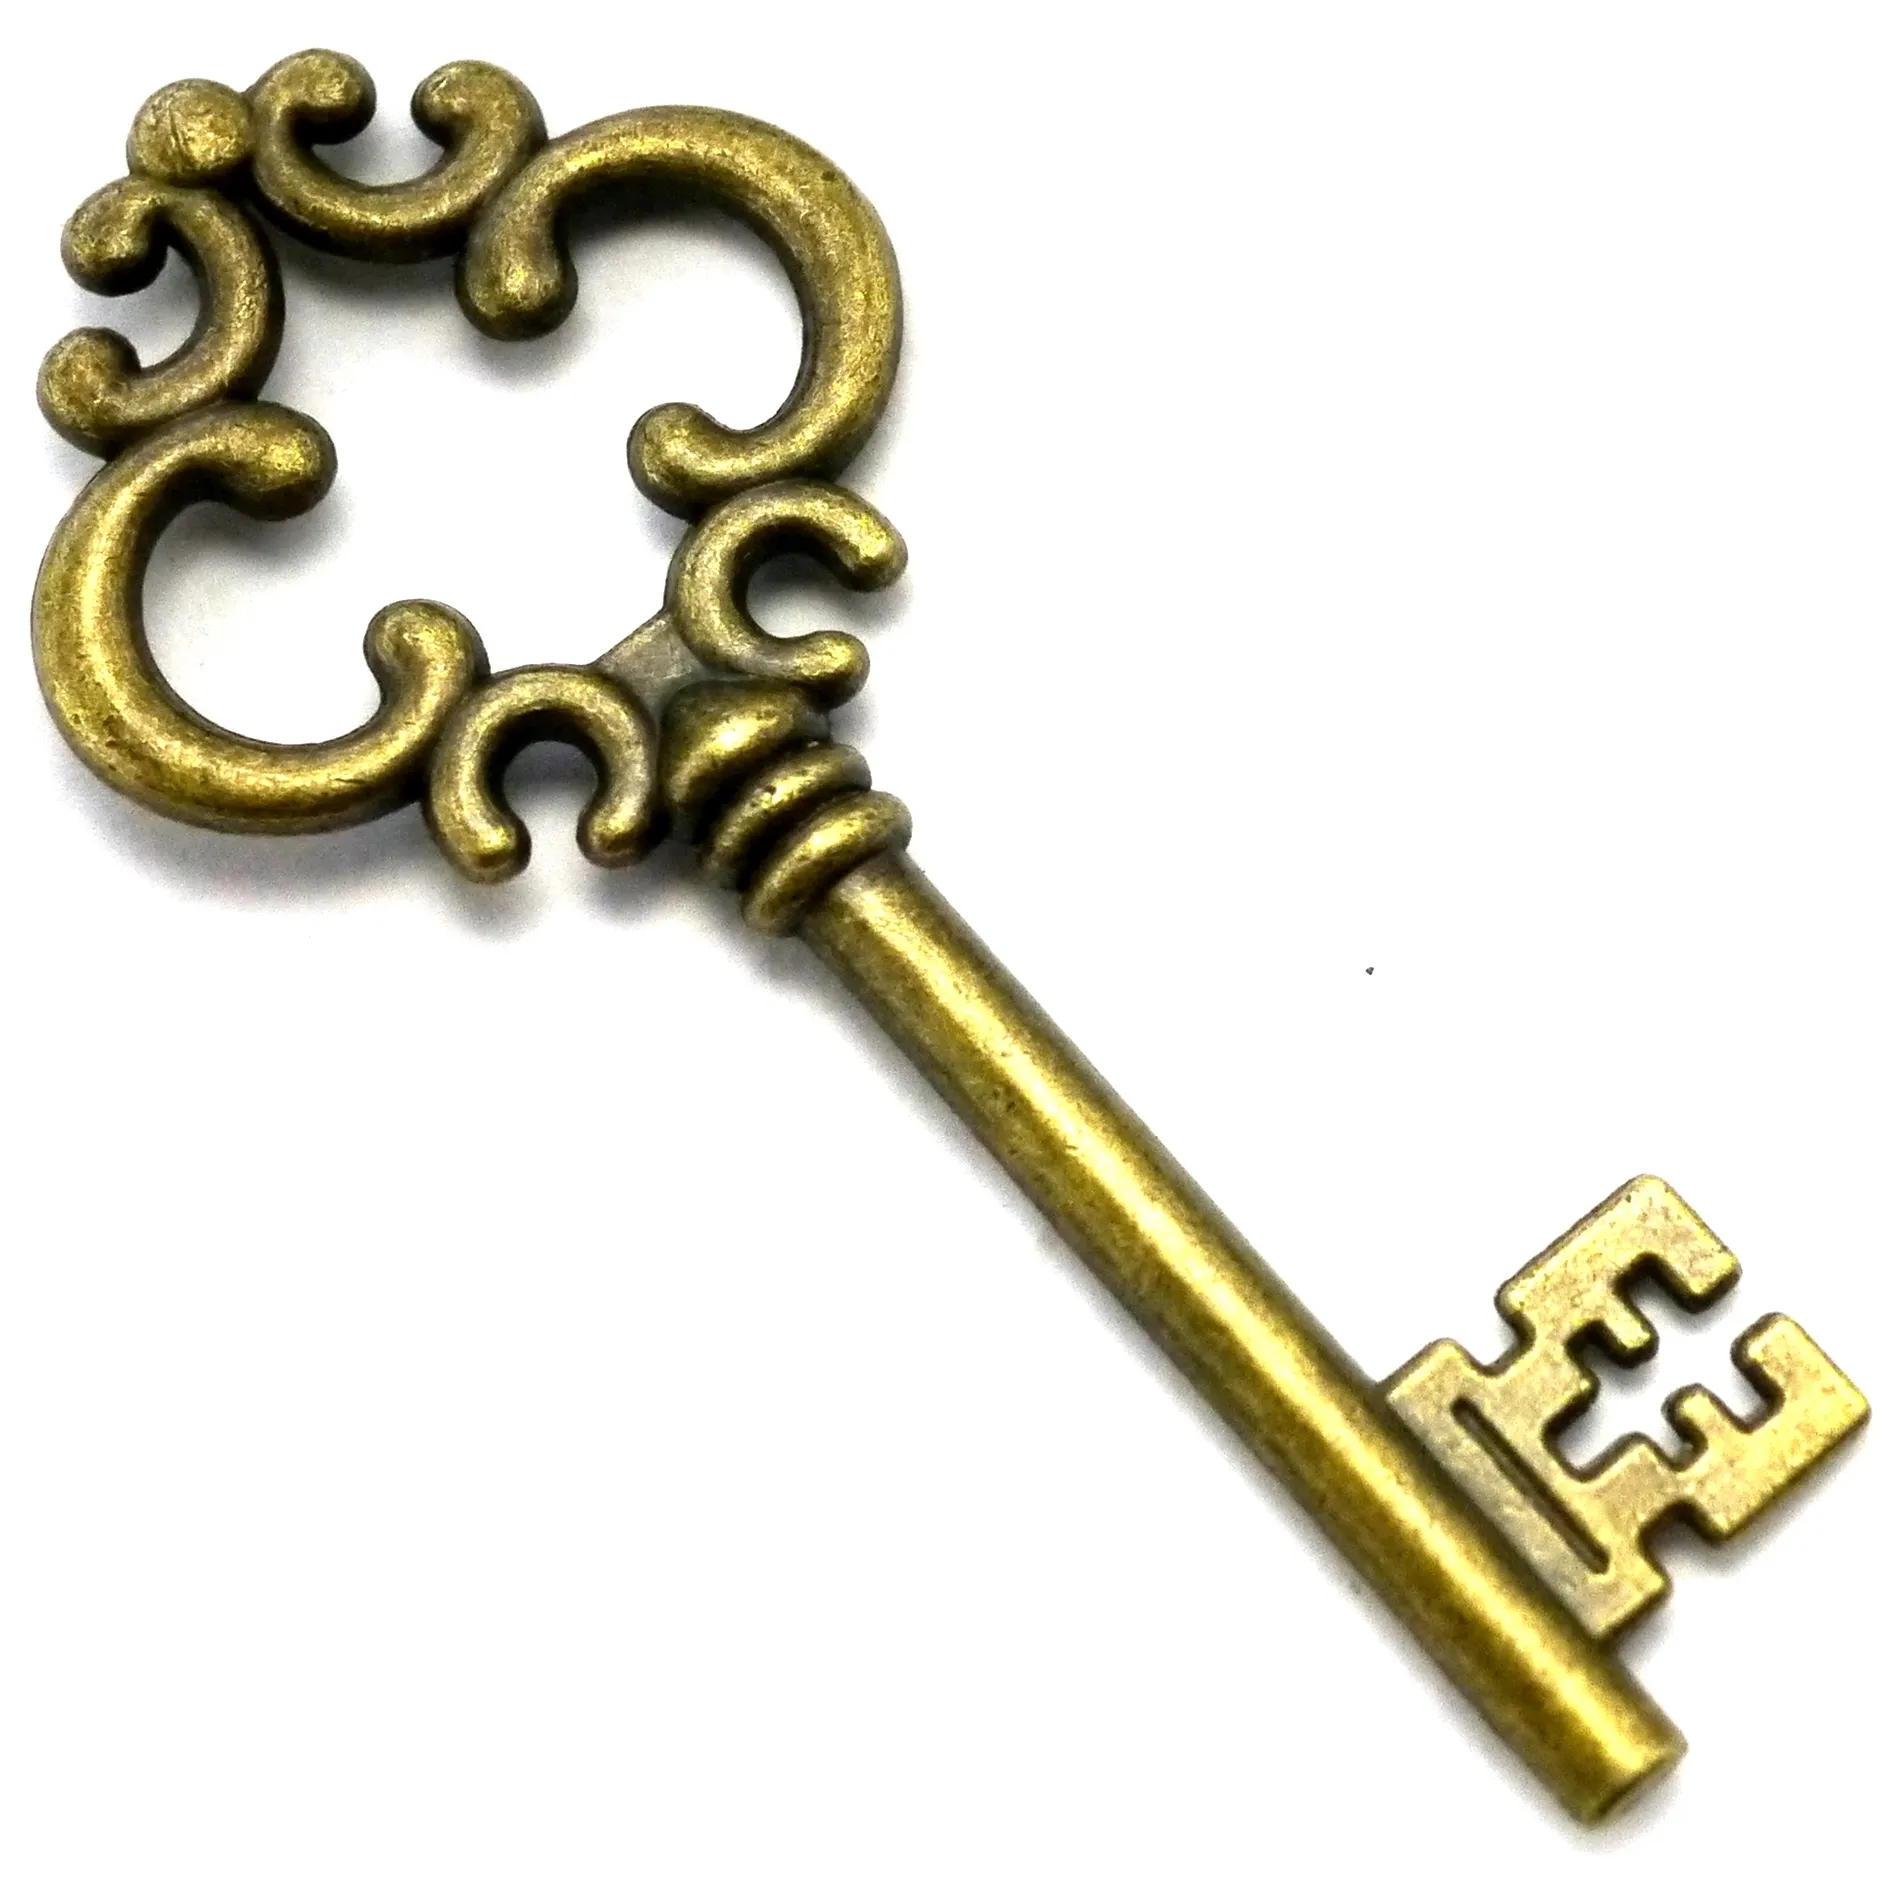 Keys picture. Ключ. Красивые ключи. Изображение золотого ключика. Старинный ключ.